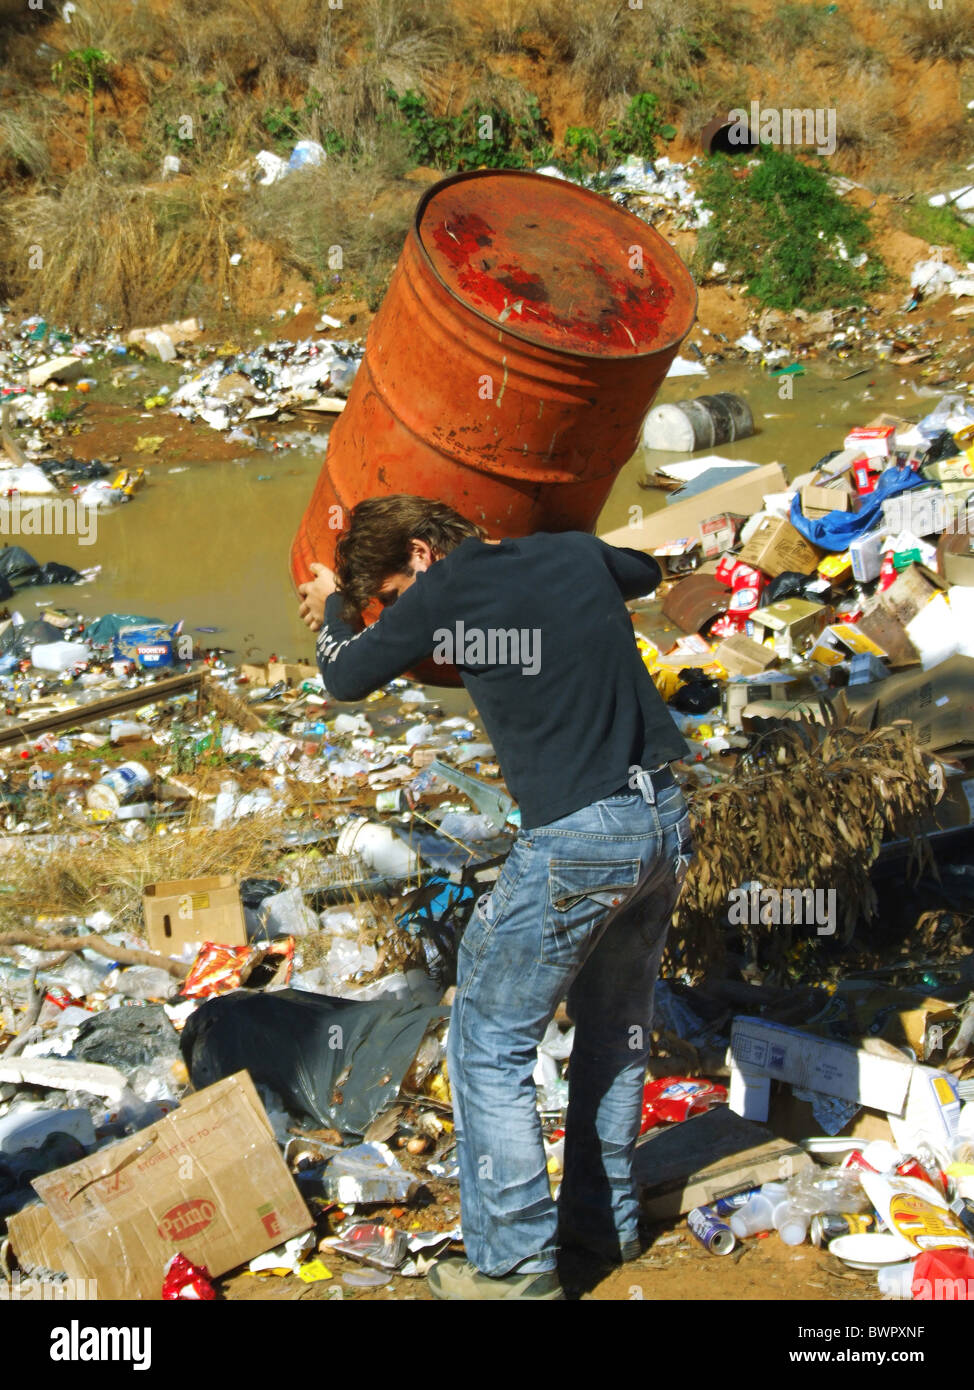 Australia Queensland Outback Garbage waste remainder garbage debris Unrat throw away get dirty contamination Stock Photo